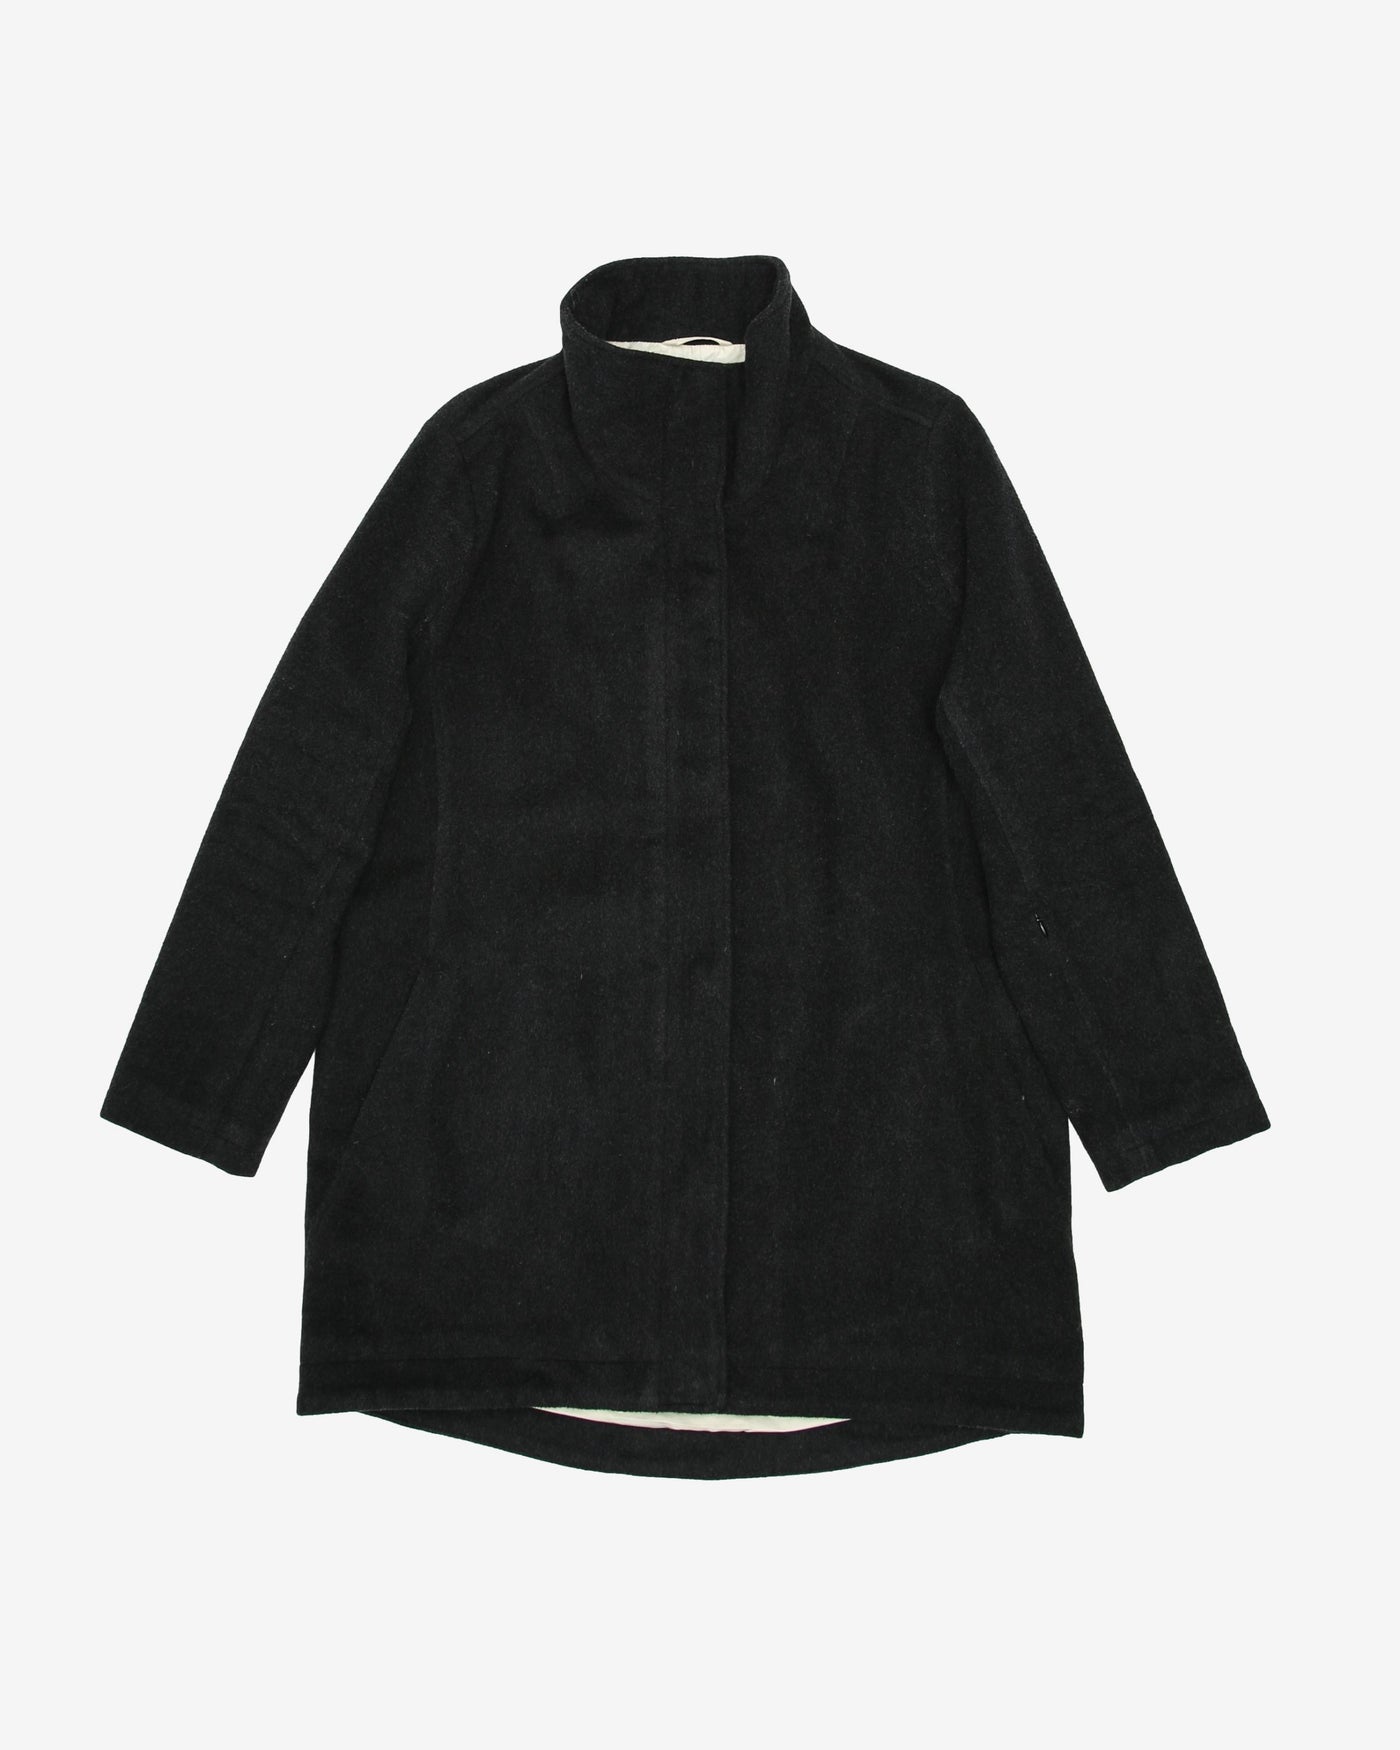 Pendleton Grey Wool Jacket Overcoat - M / L